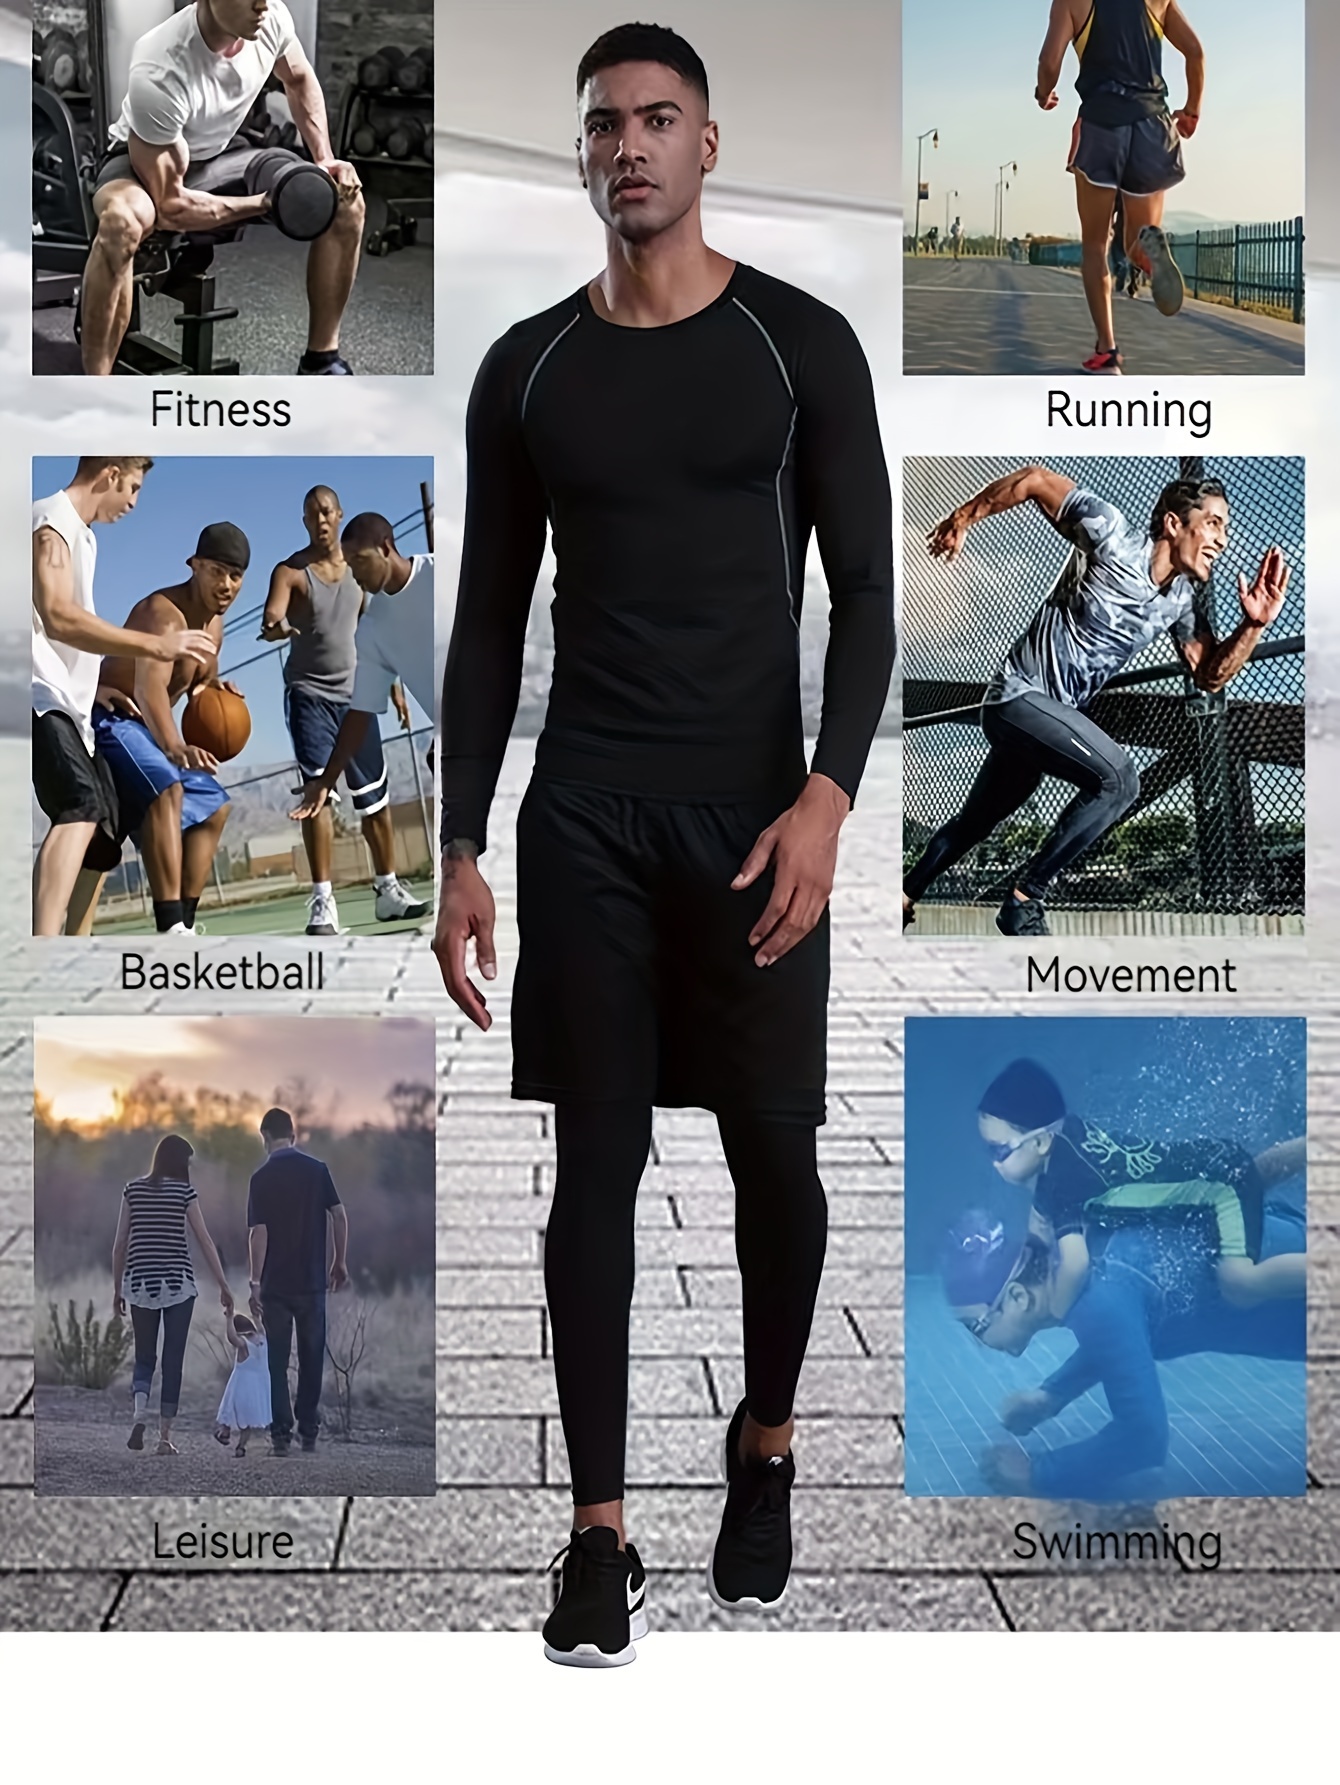 Men's Running Breathable Long Tights Dry+ - black